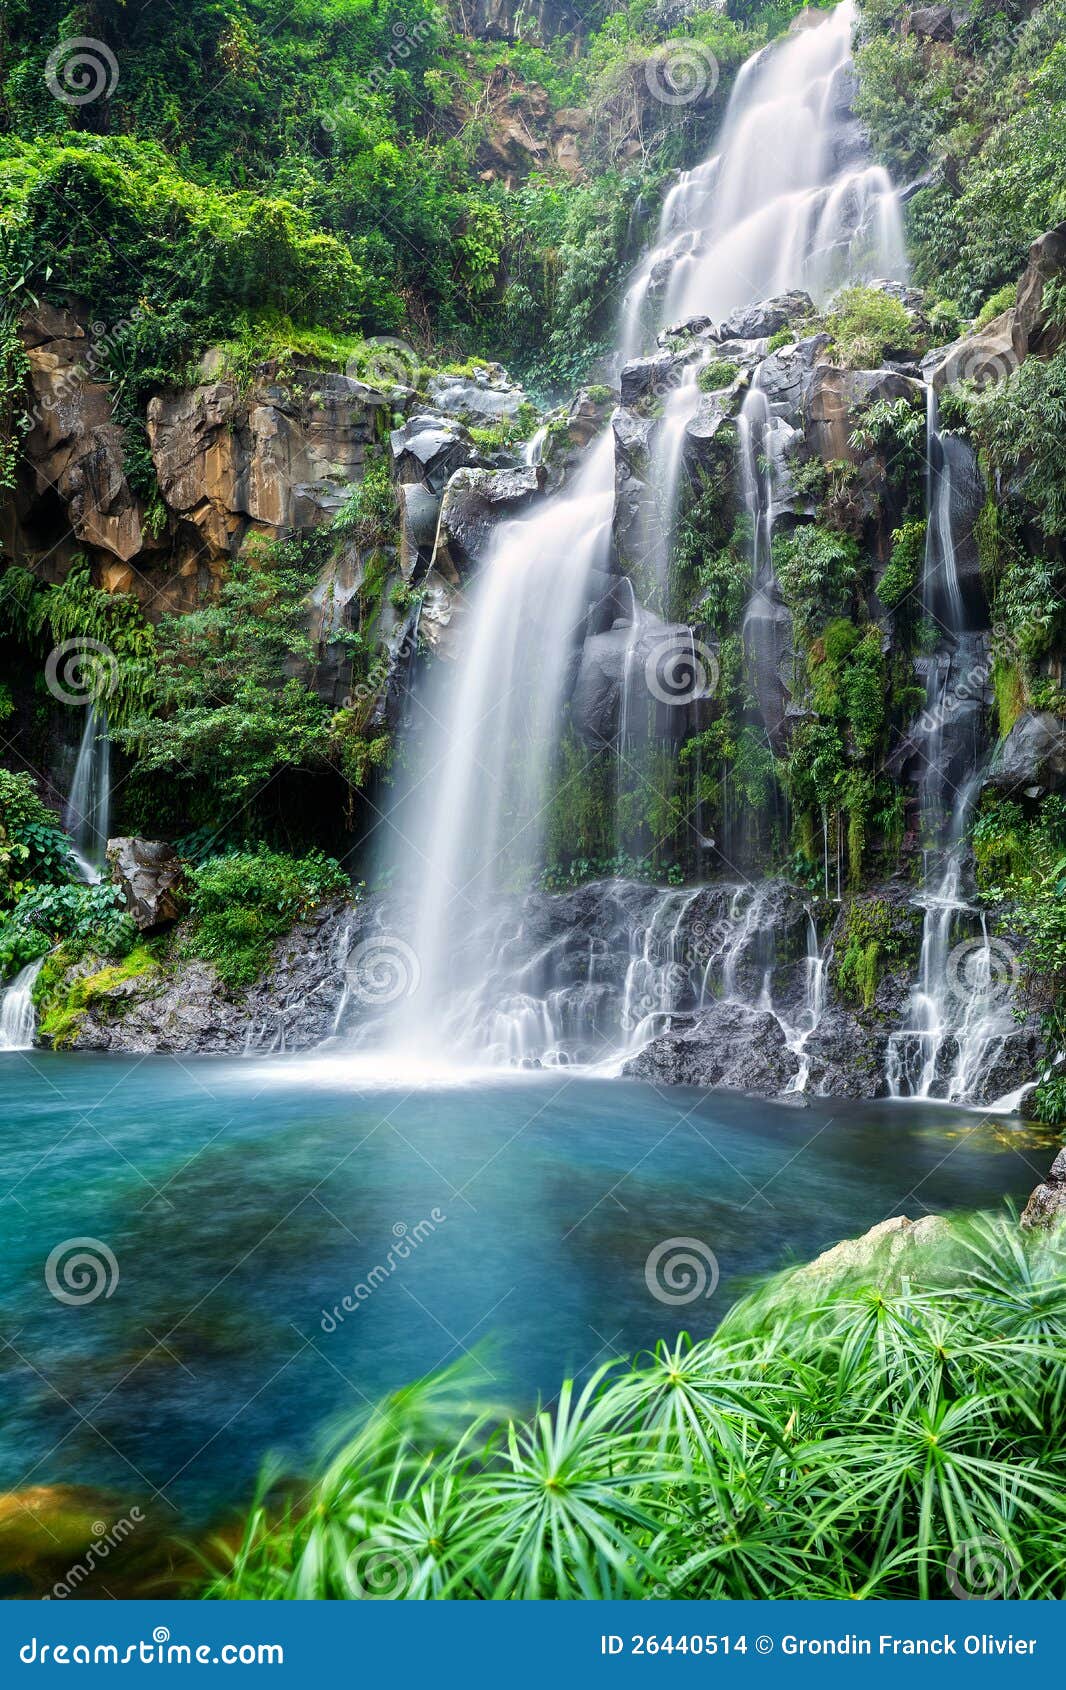 mountainside waterfall